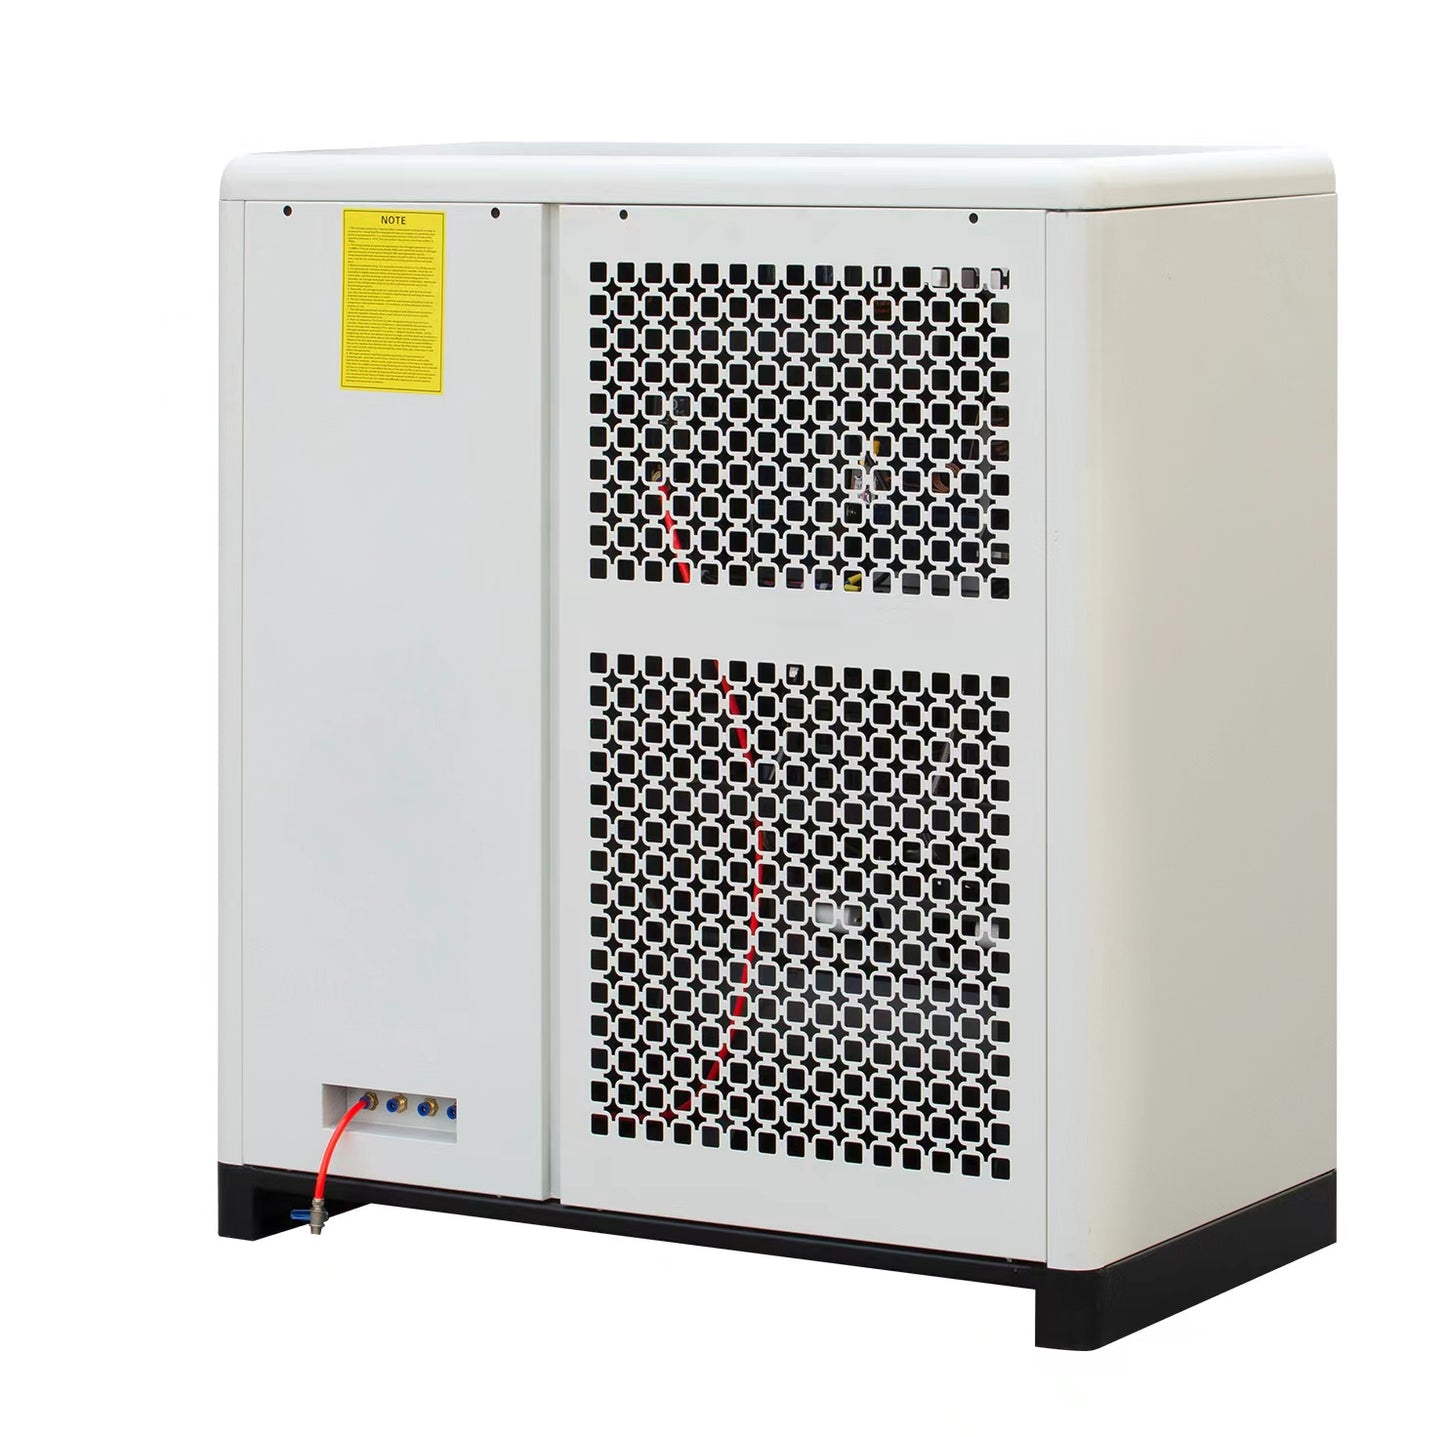 JINSLU Industrial High-Efficiency Nitrogen Generator SG-Z059 for Laser Welding Certification of CE